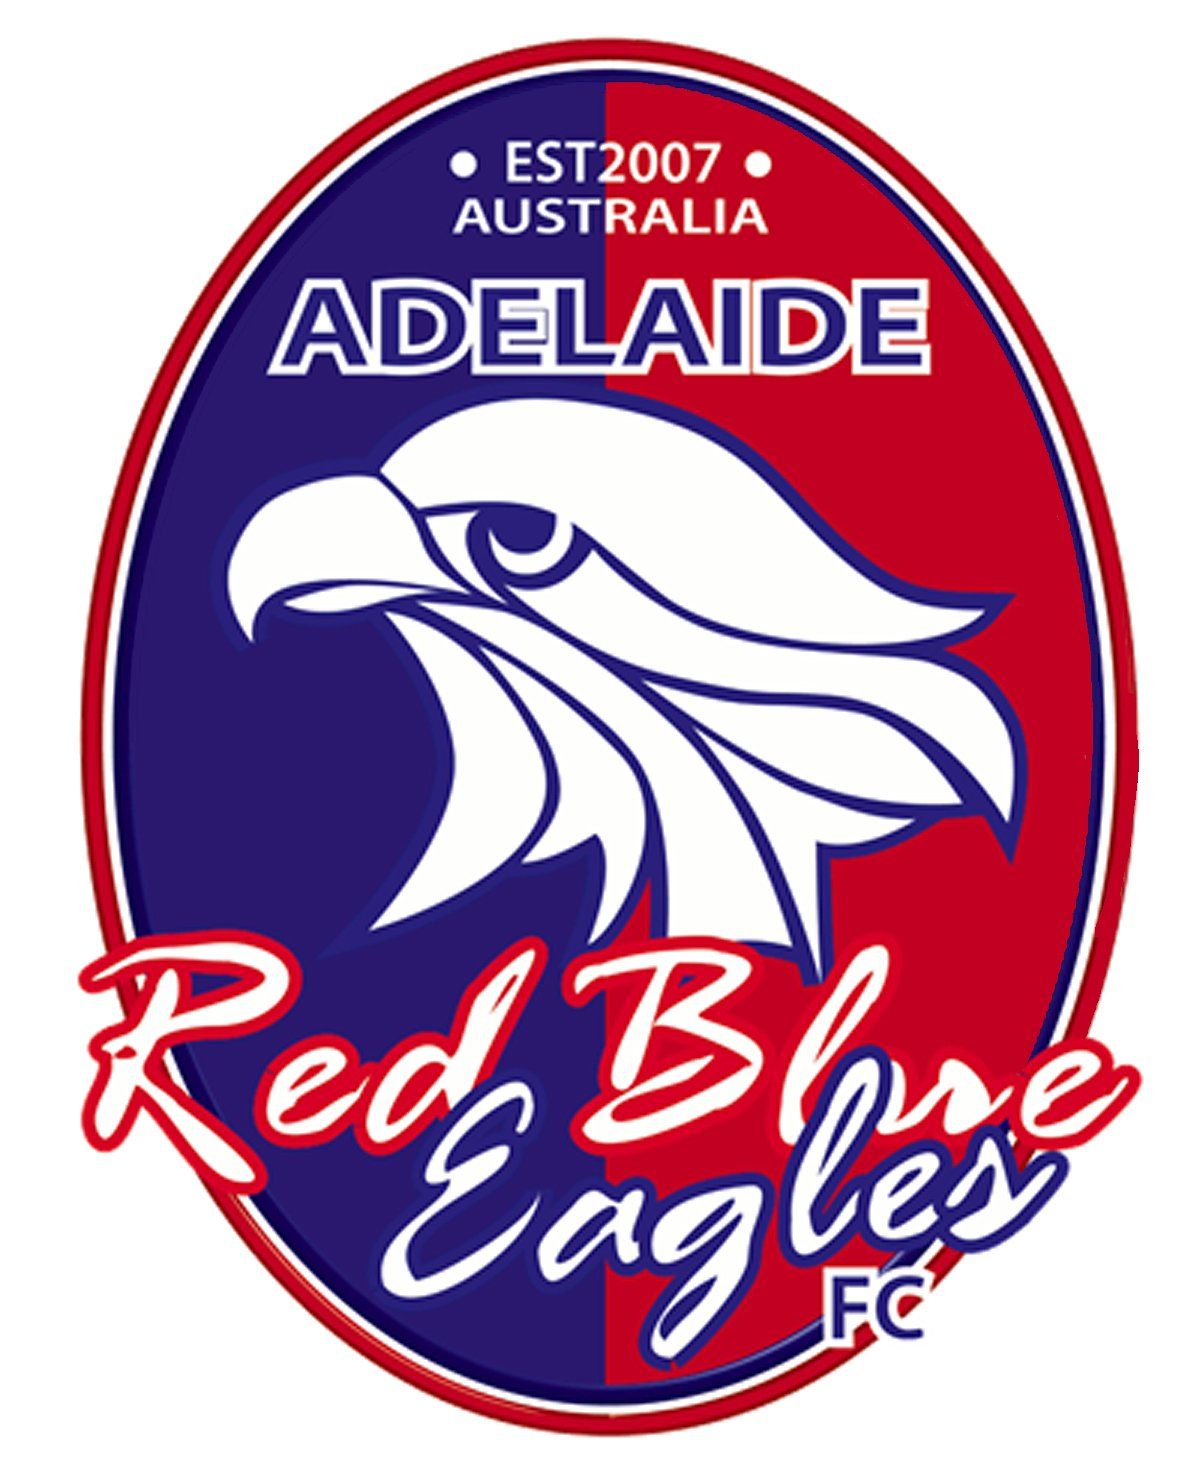 Adelaide Red Blue Eagles Football Club